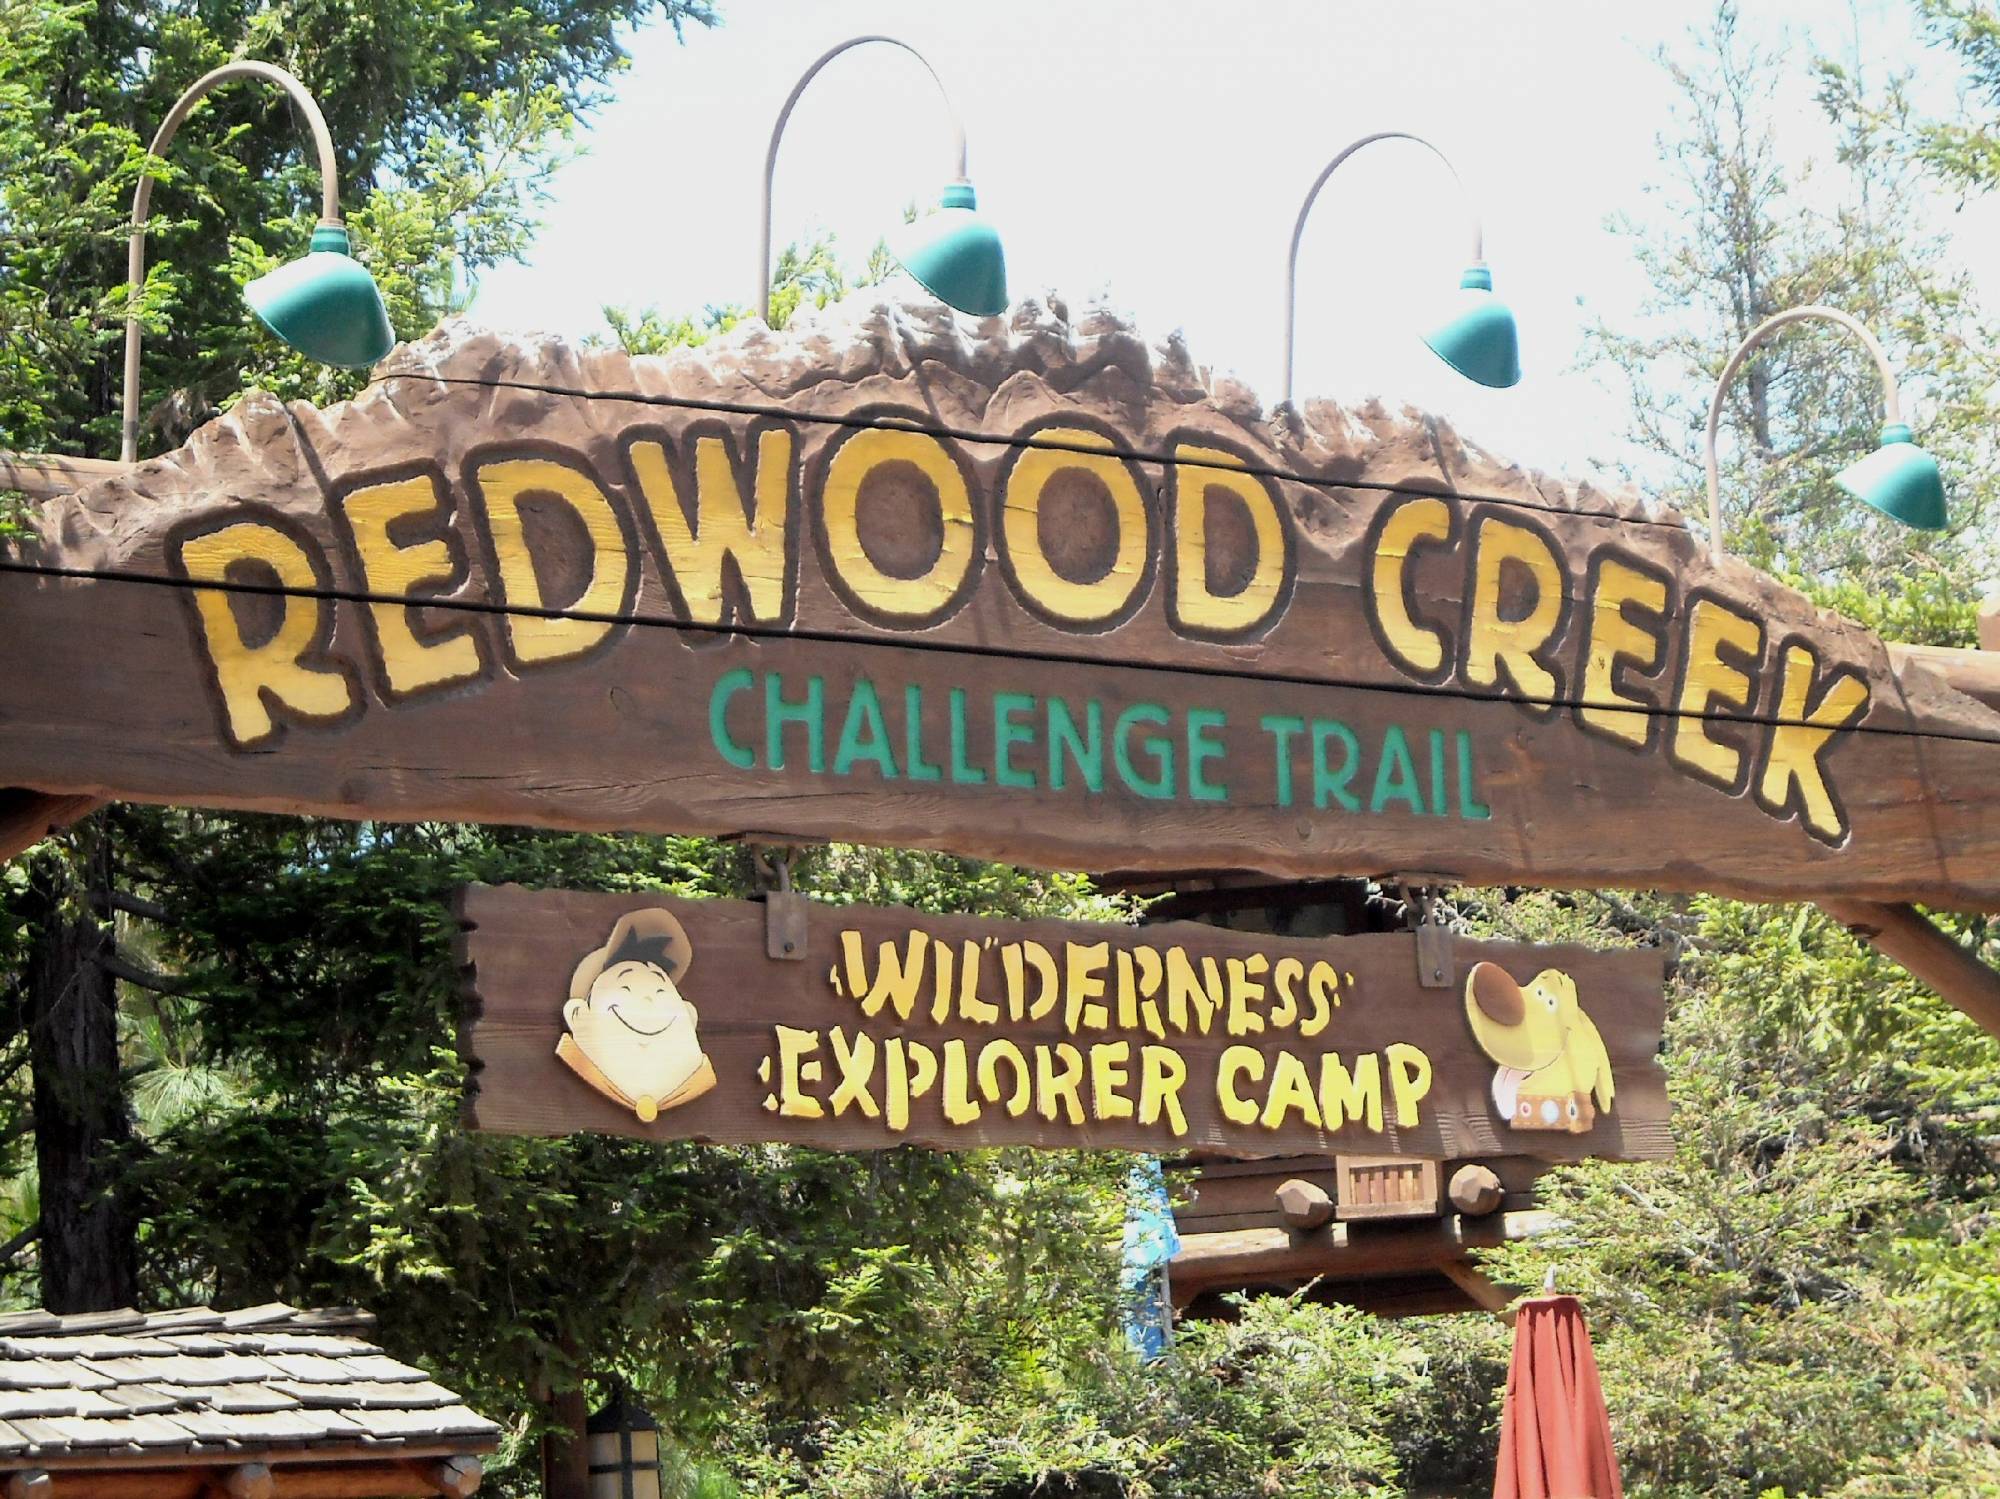 Explore the Redwood Creek Challenge at Disney California Adventure | PassPorter.com